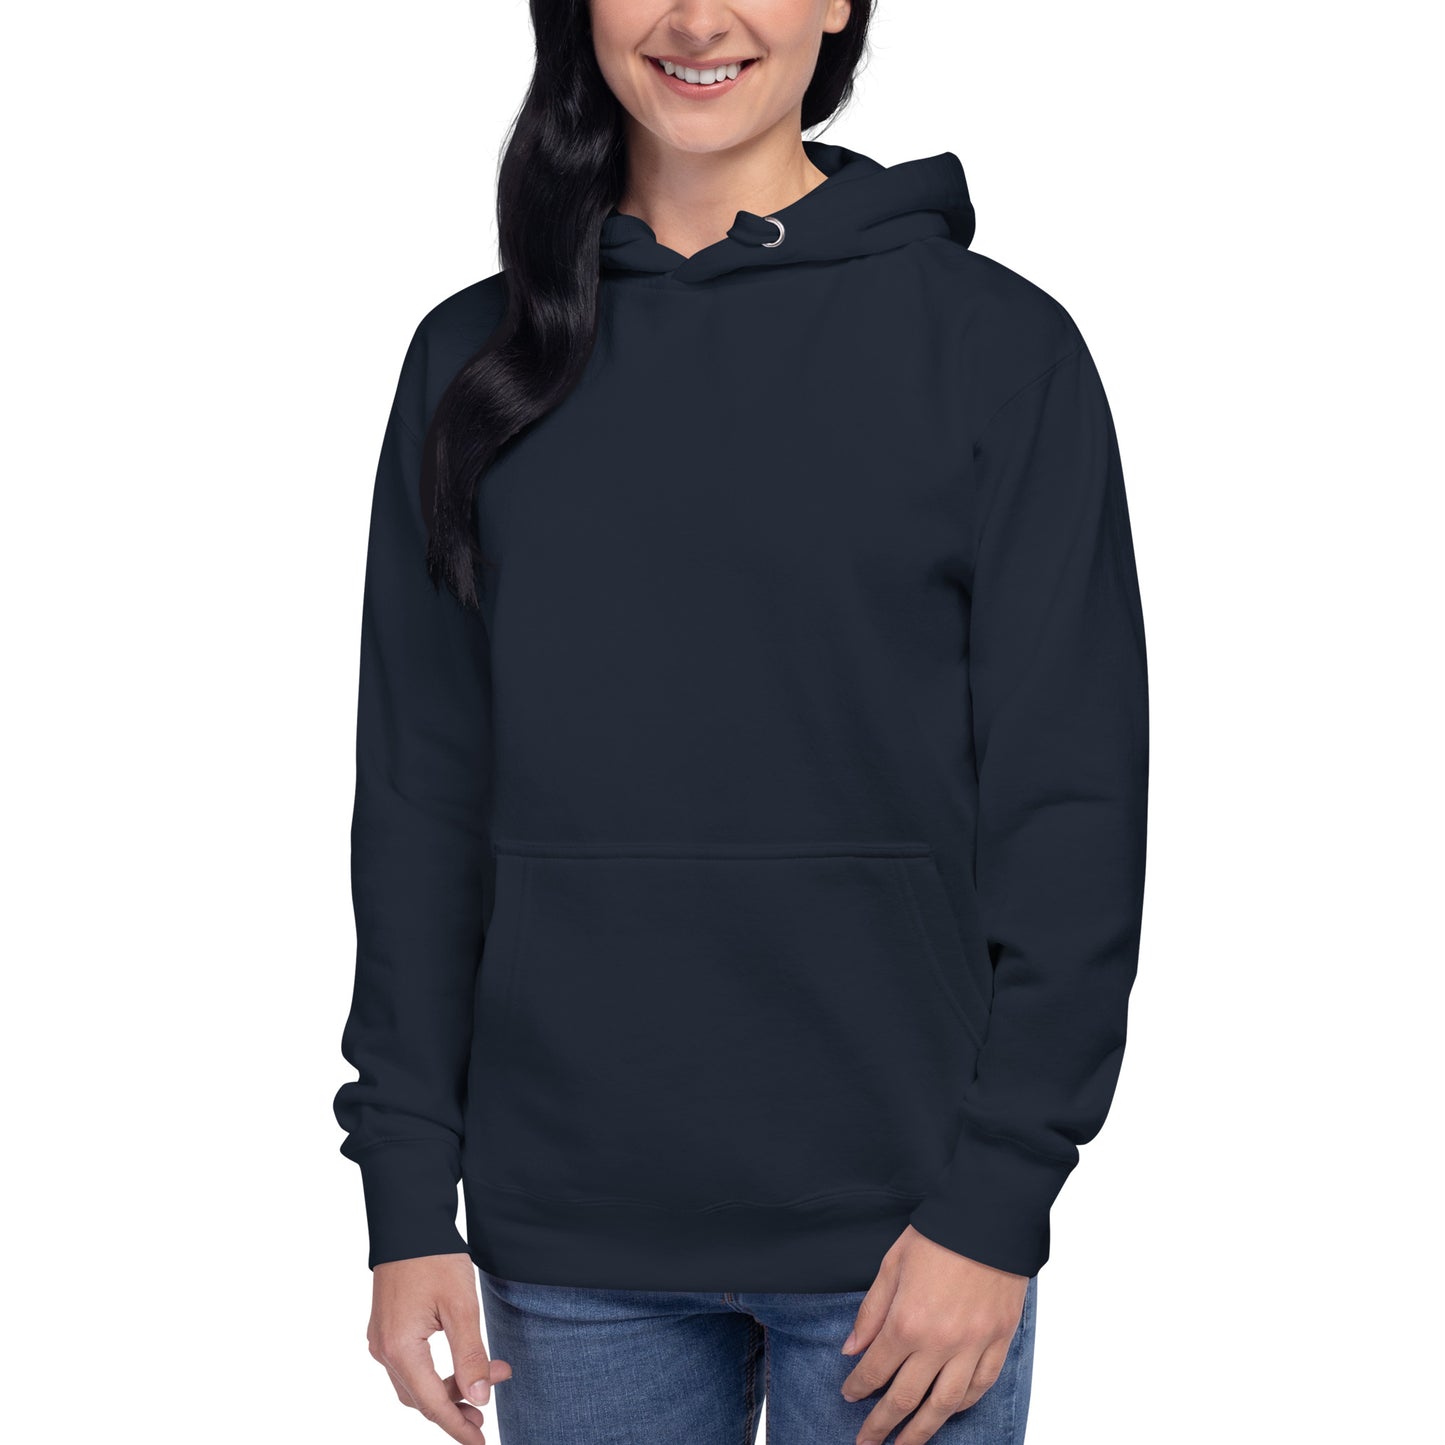 "Strength and light" women's hoodie (customer's request)